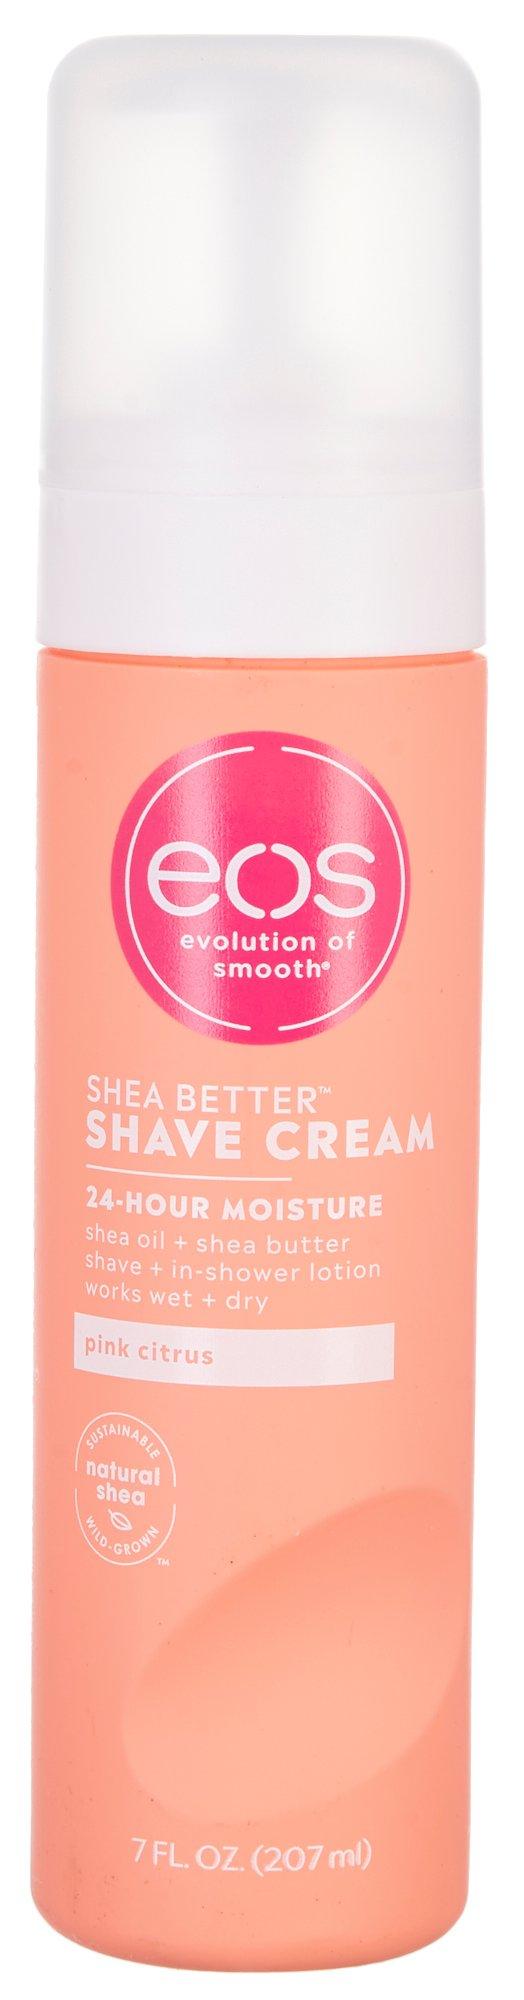 Shea Better Pink Citrus 24-Hour Moisture Shave Cream